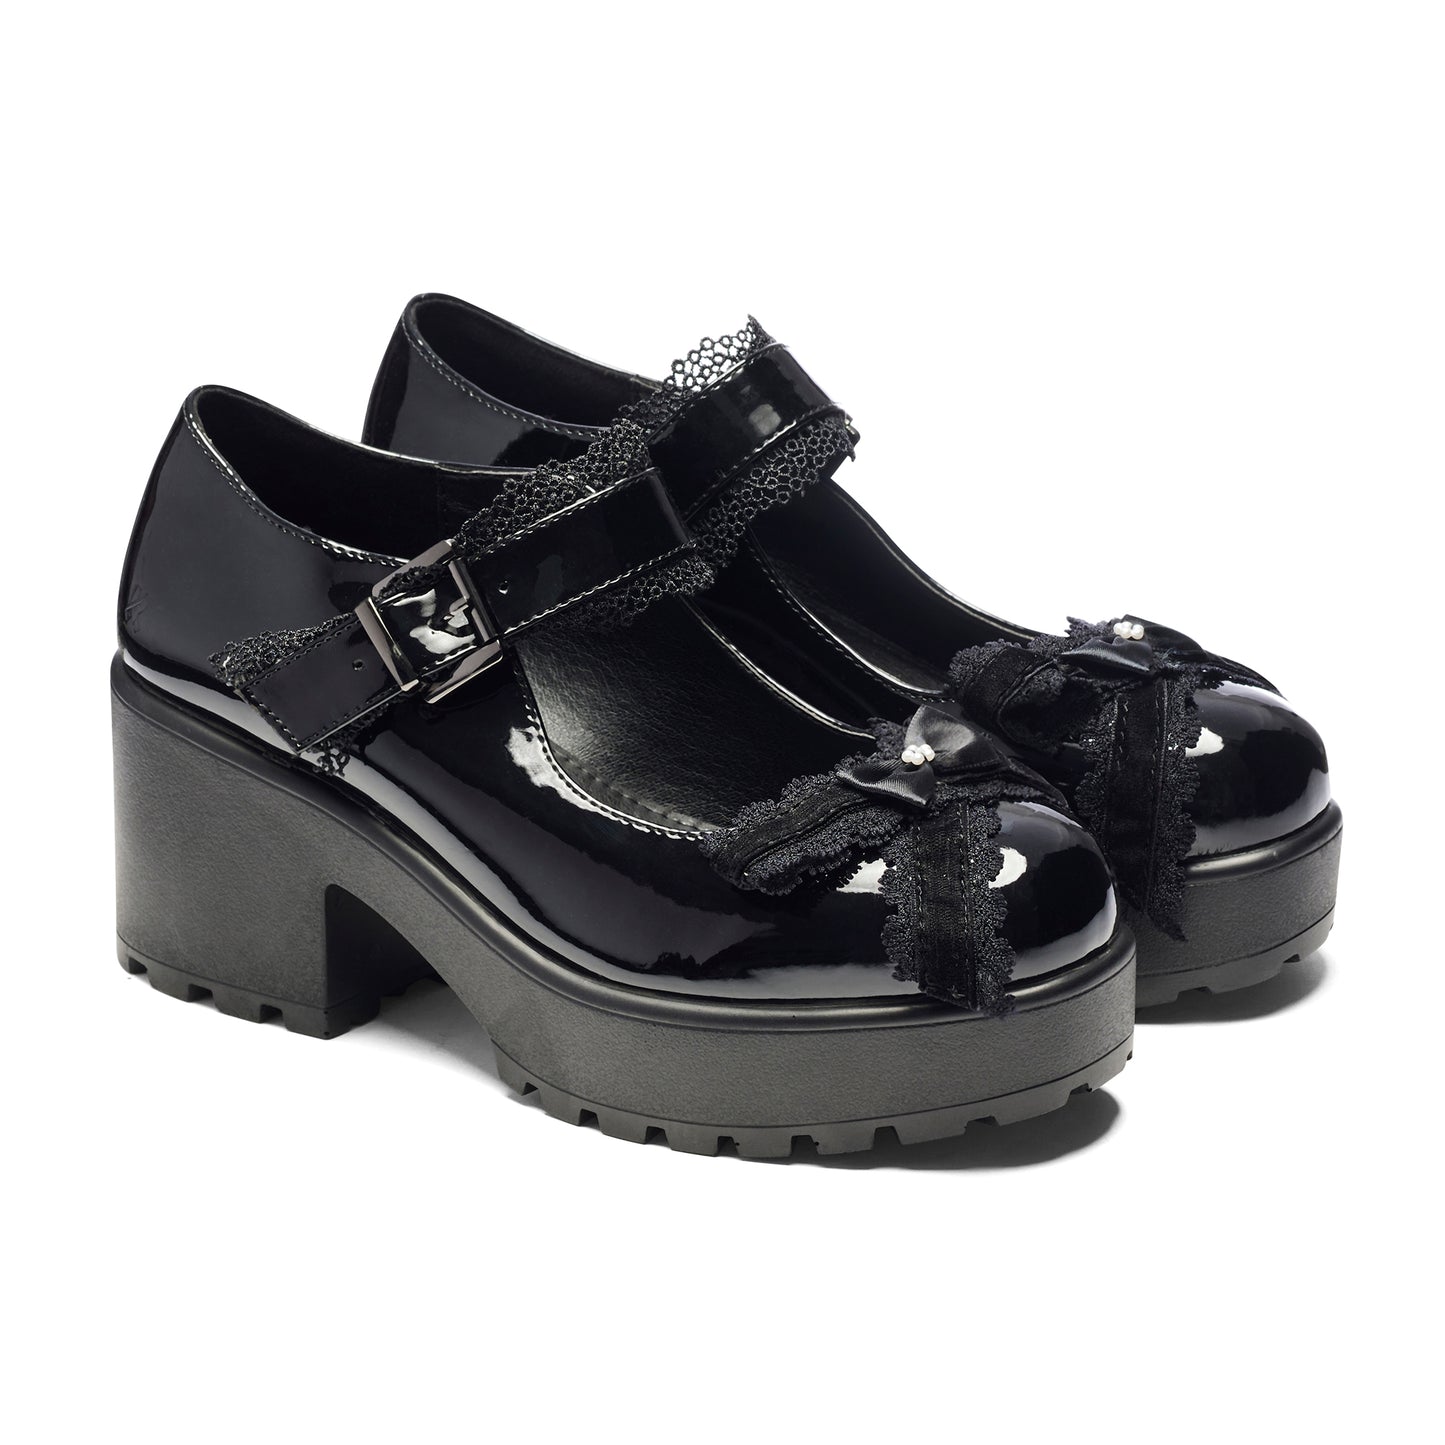 Tira May Jane Shoes 'Cute Gloom Edition'